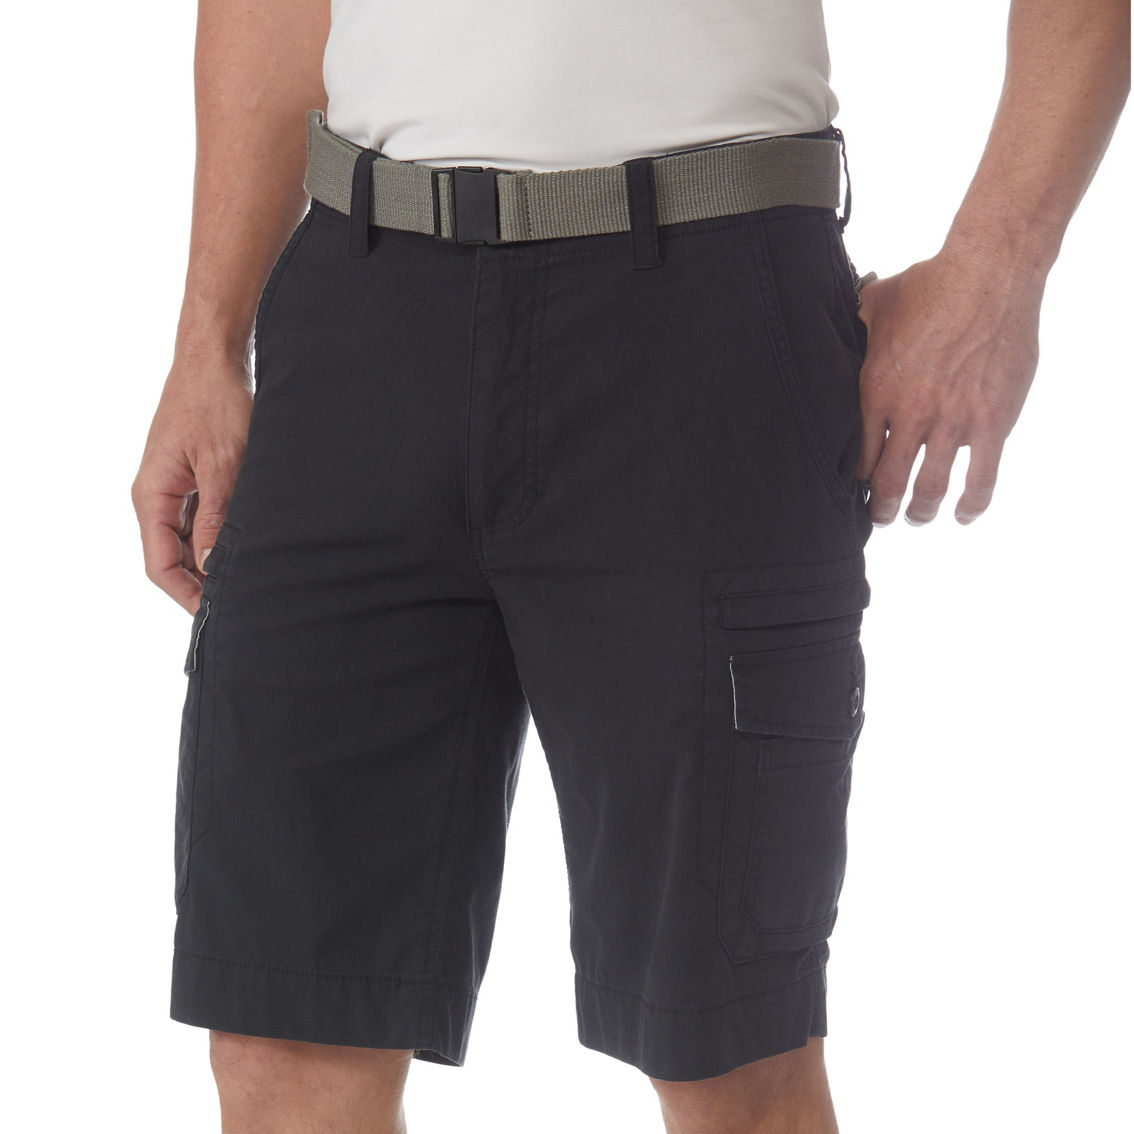 Wearfirst Stretch Cotton Nylon Belted Cargo Shorts Shorts Clothing